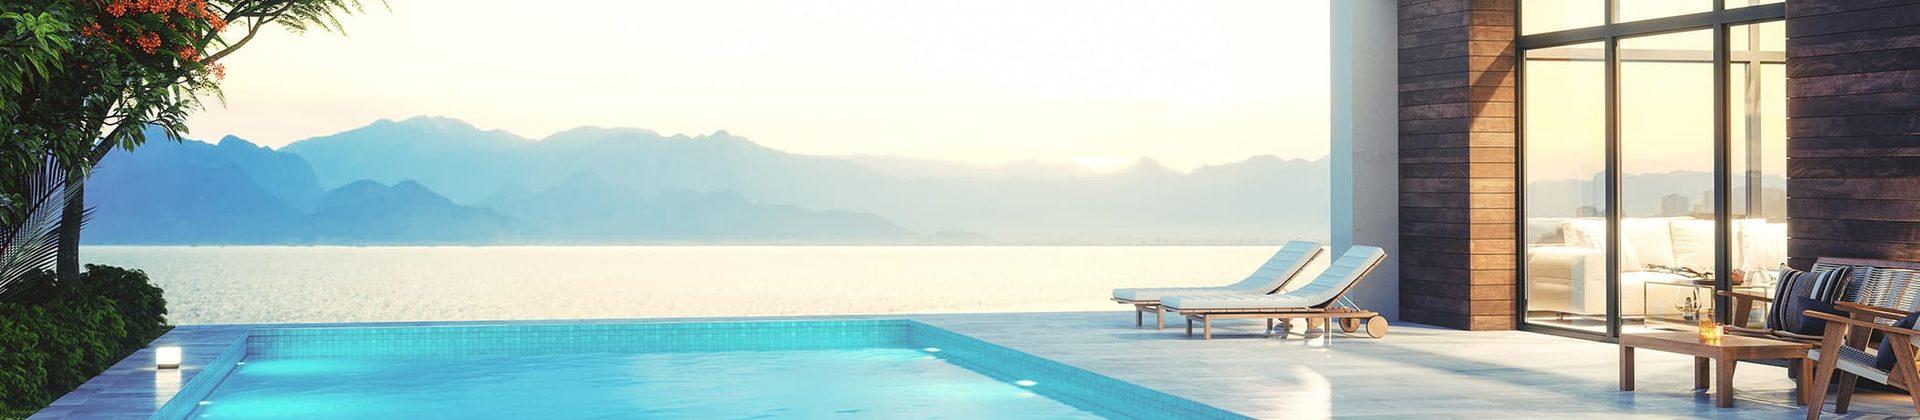 Ferienhaus mit Pool auf Ibiza - TUI